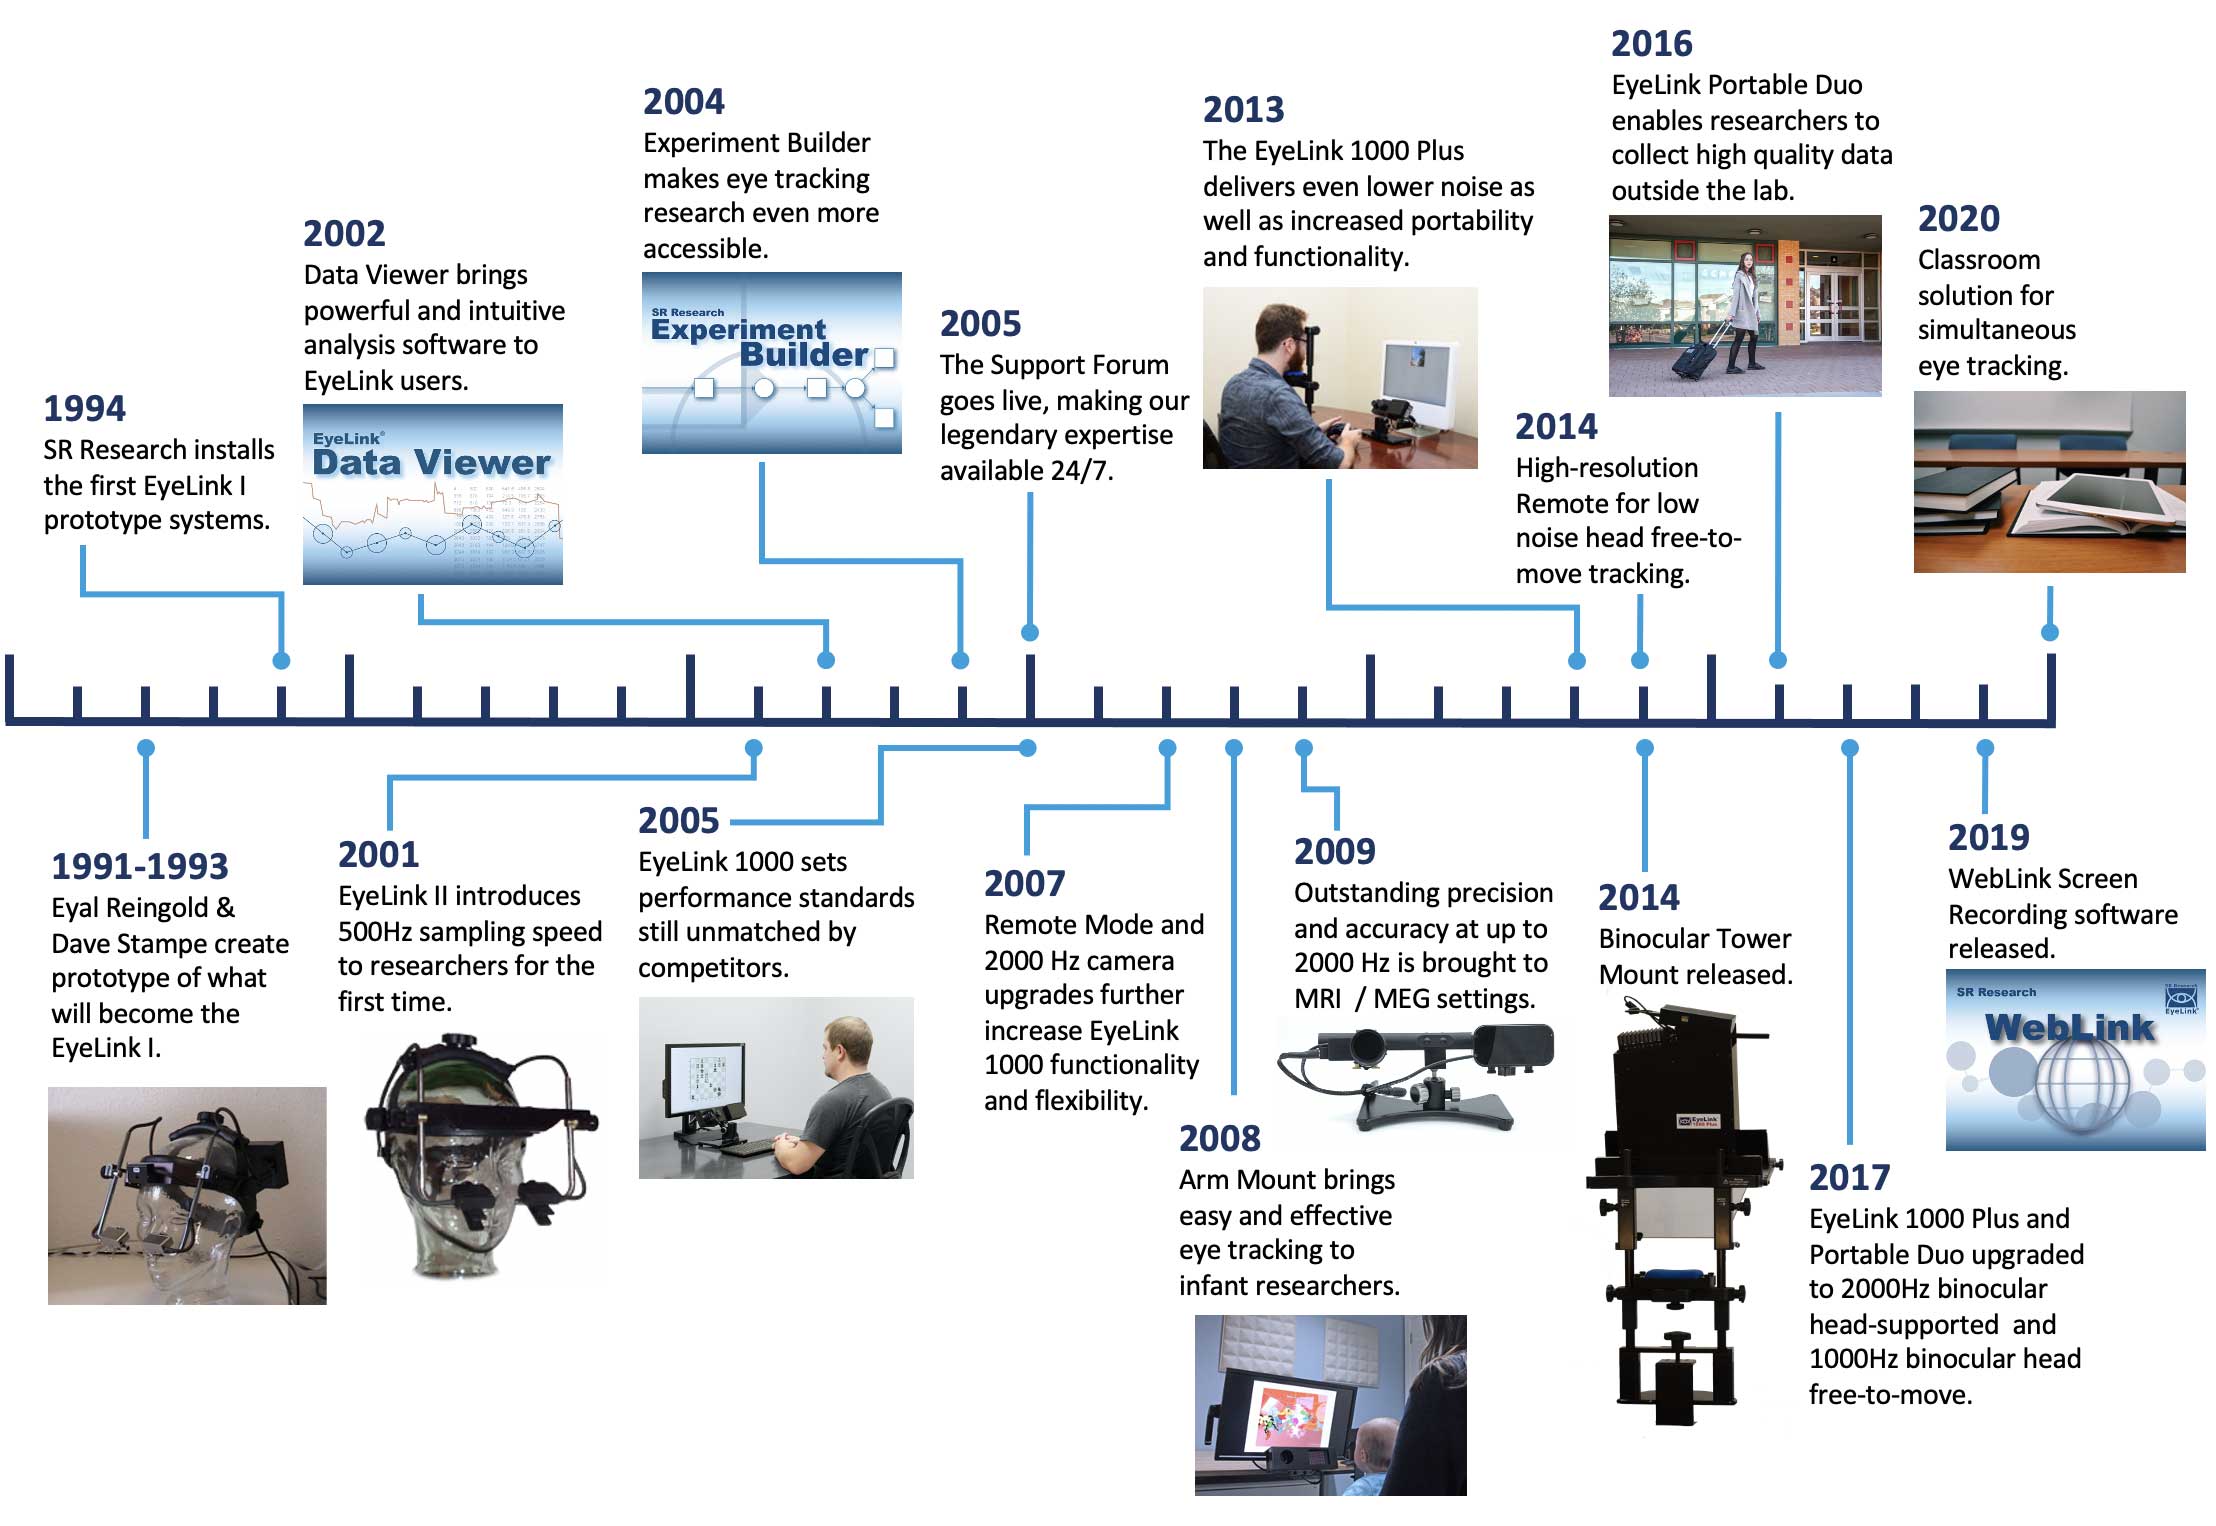 SR Research History Timeline